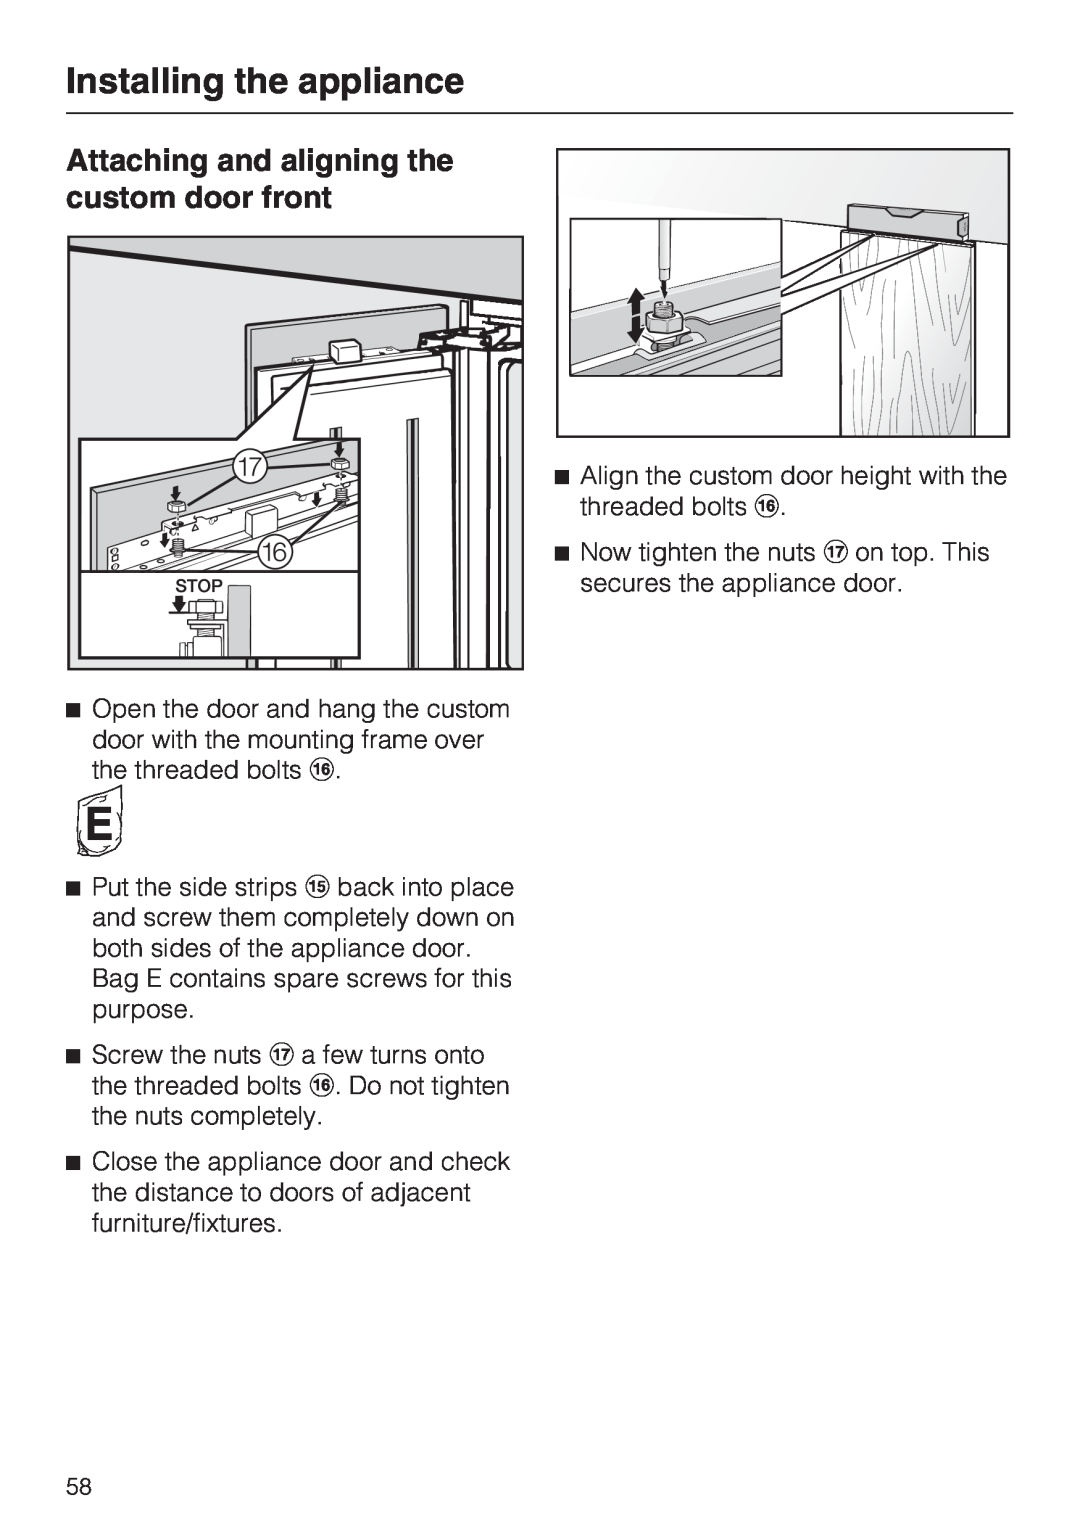 Miele K 1801 Vi, K 1911 Vi, K 1901 Vi, K 1811 Vi Attaching and aligning the custom door front, Installing the appliance 